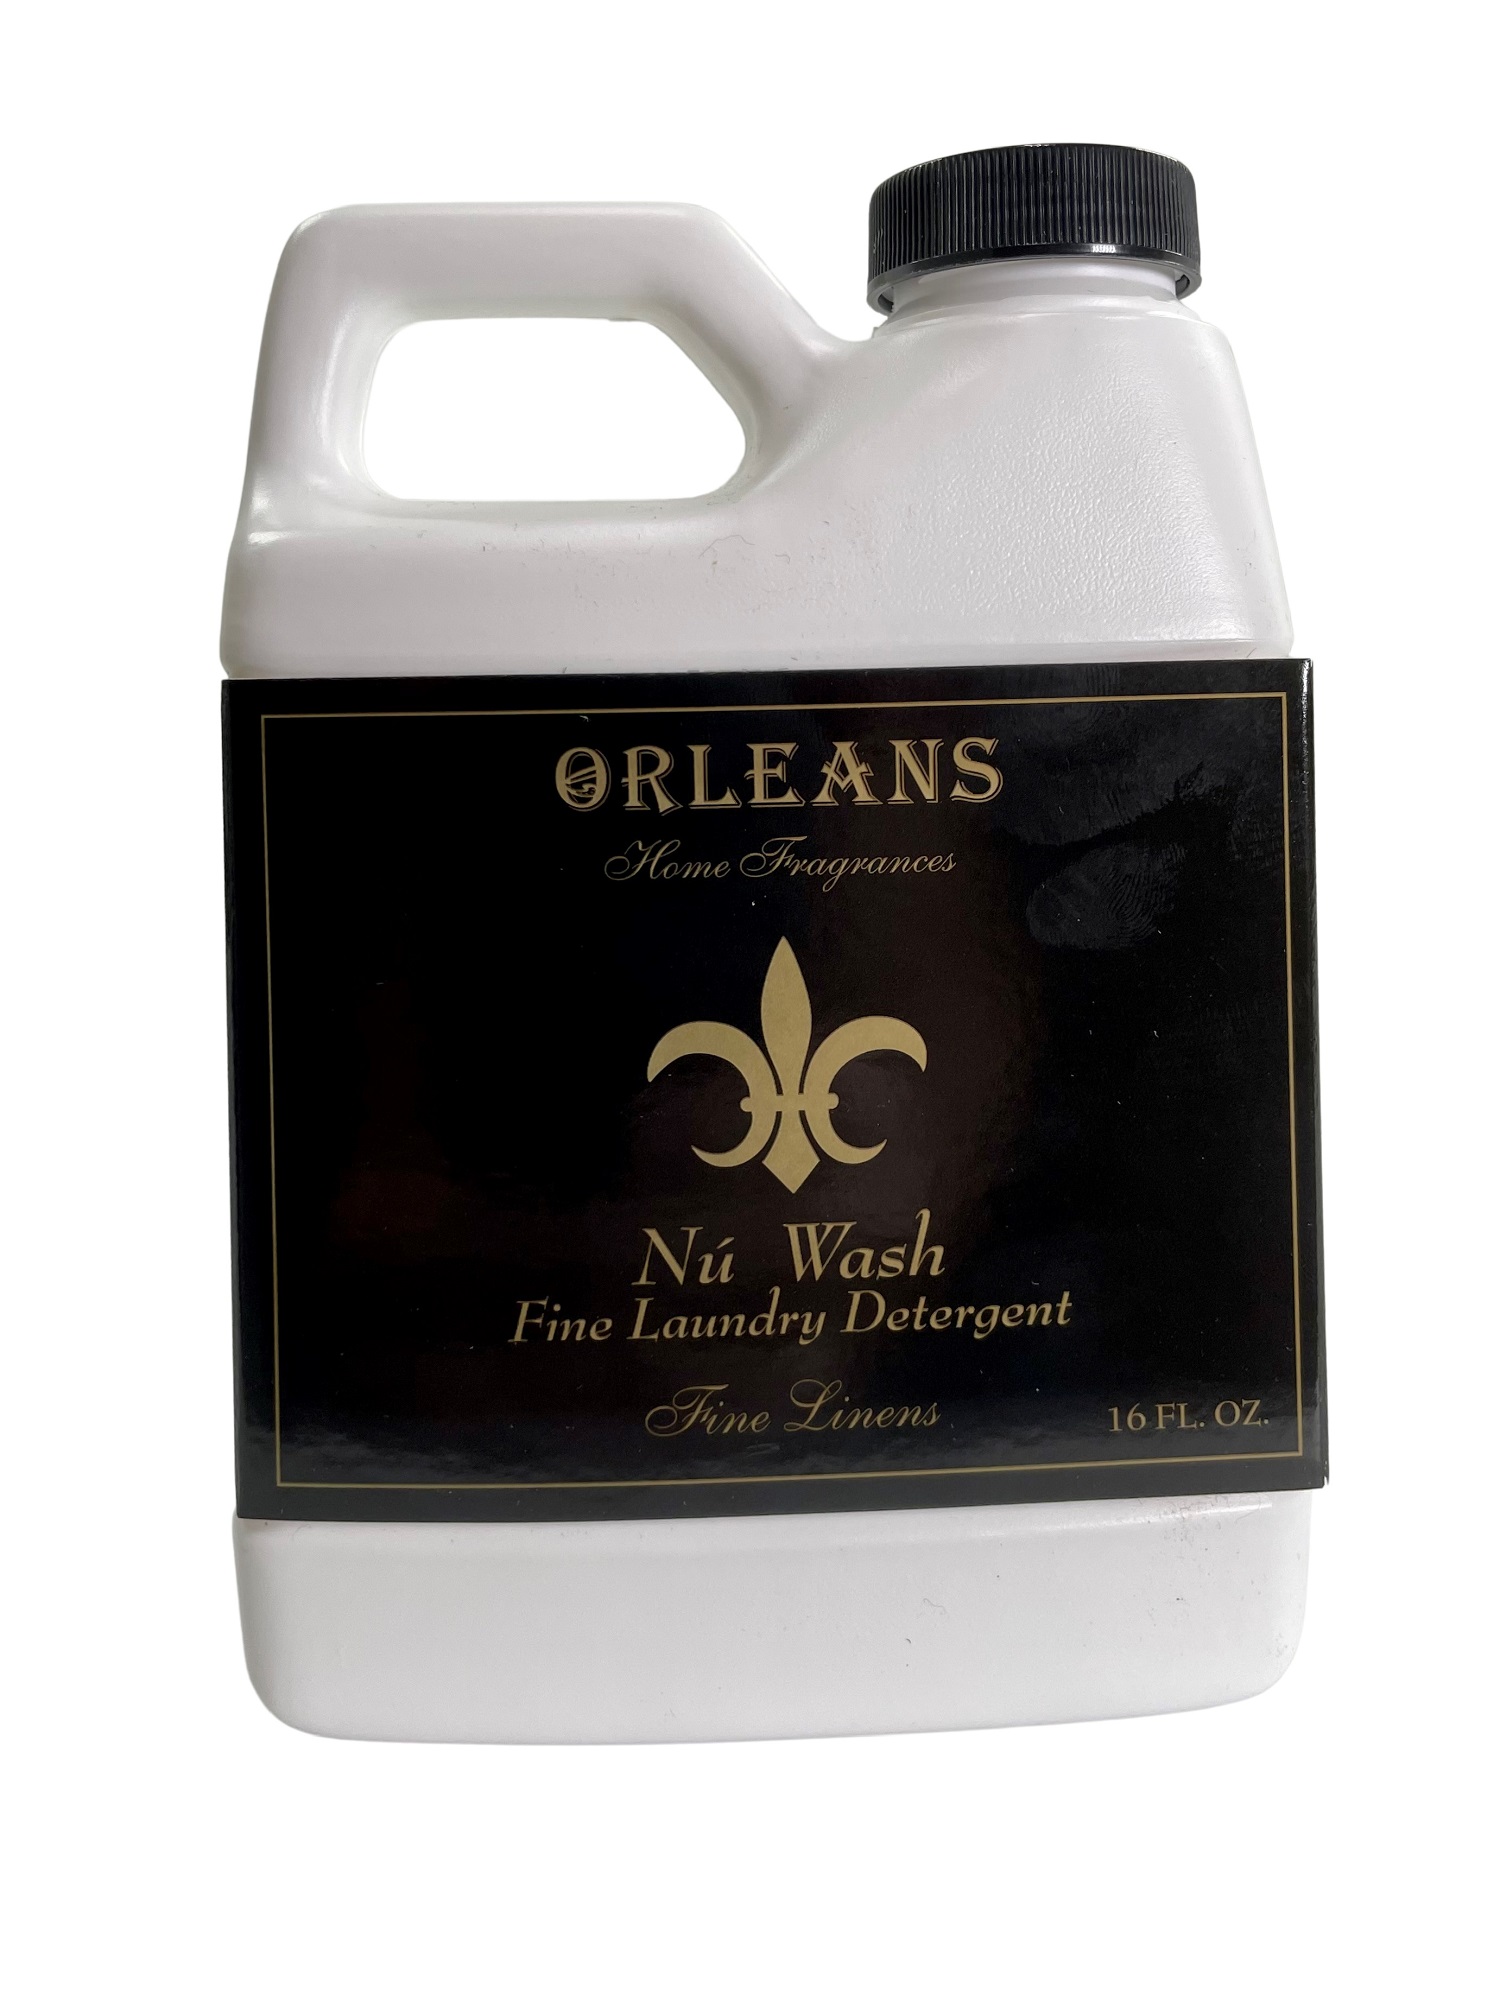 Orleans Home Fragrance Nu Wash Fine Laundry Detergent Fine Linens 16oz